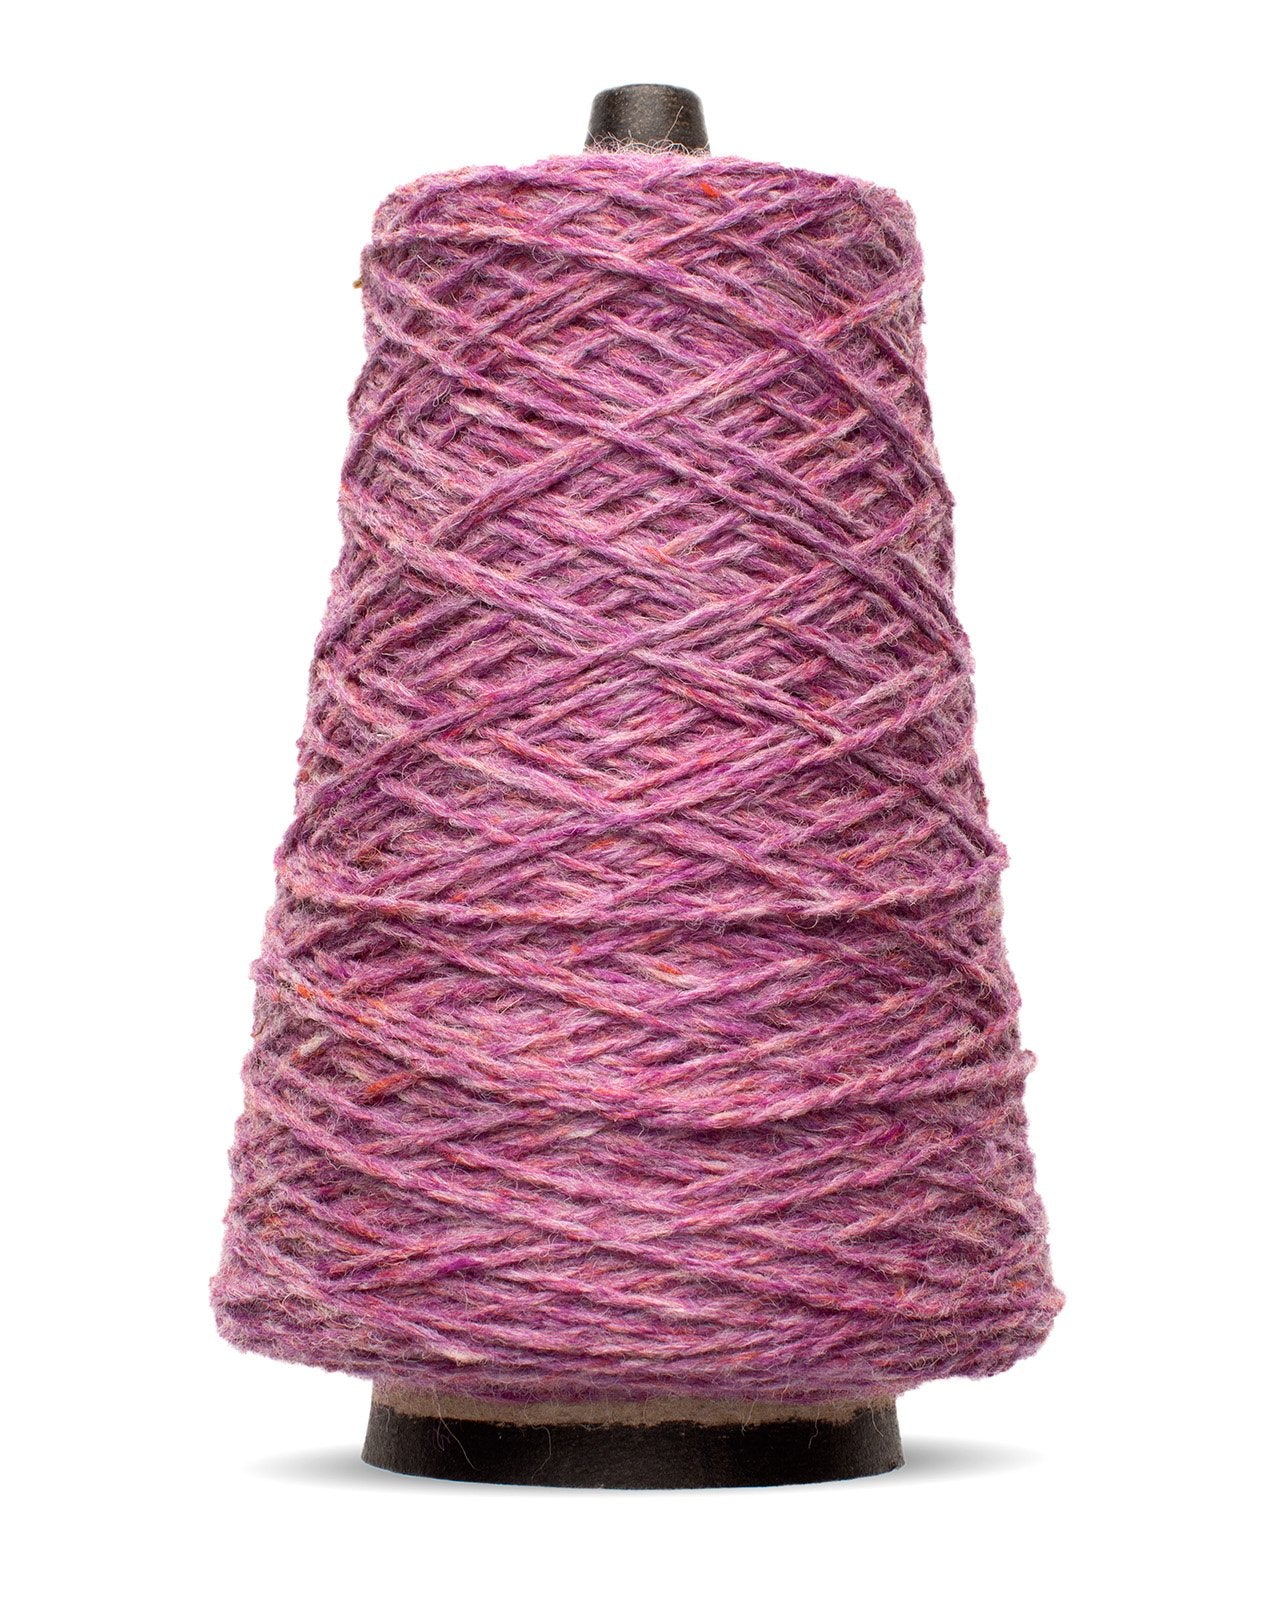 Explore Crochet: Bunting Kit – Berry